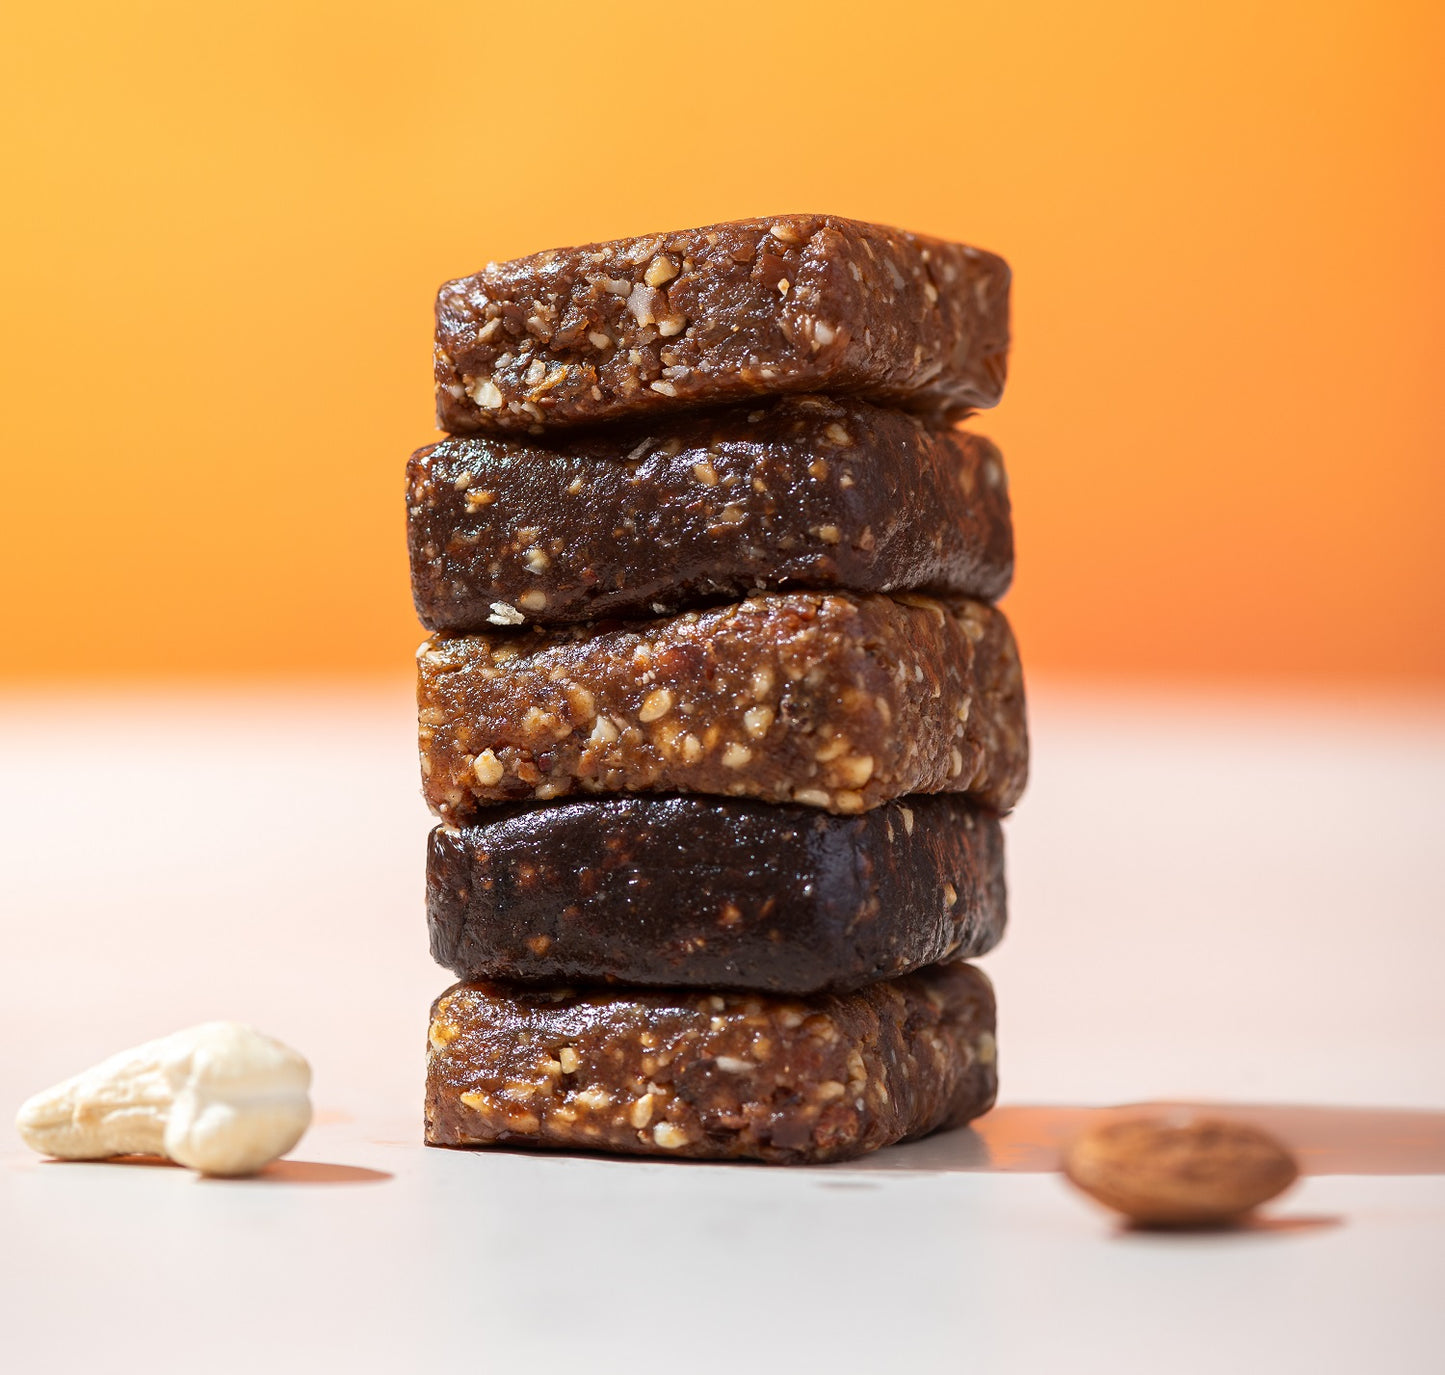 Date Nut Squares - Cocoa and Orange : 8 Bars